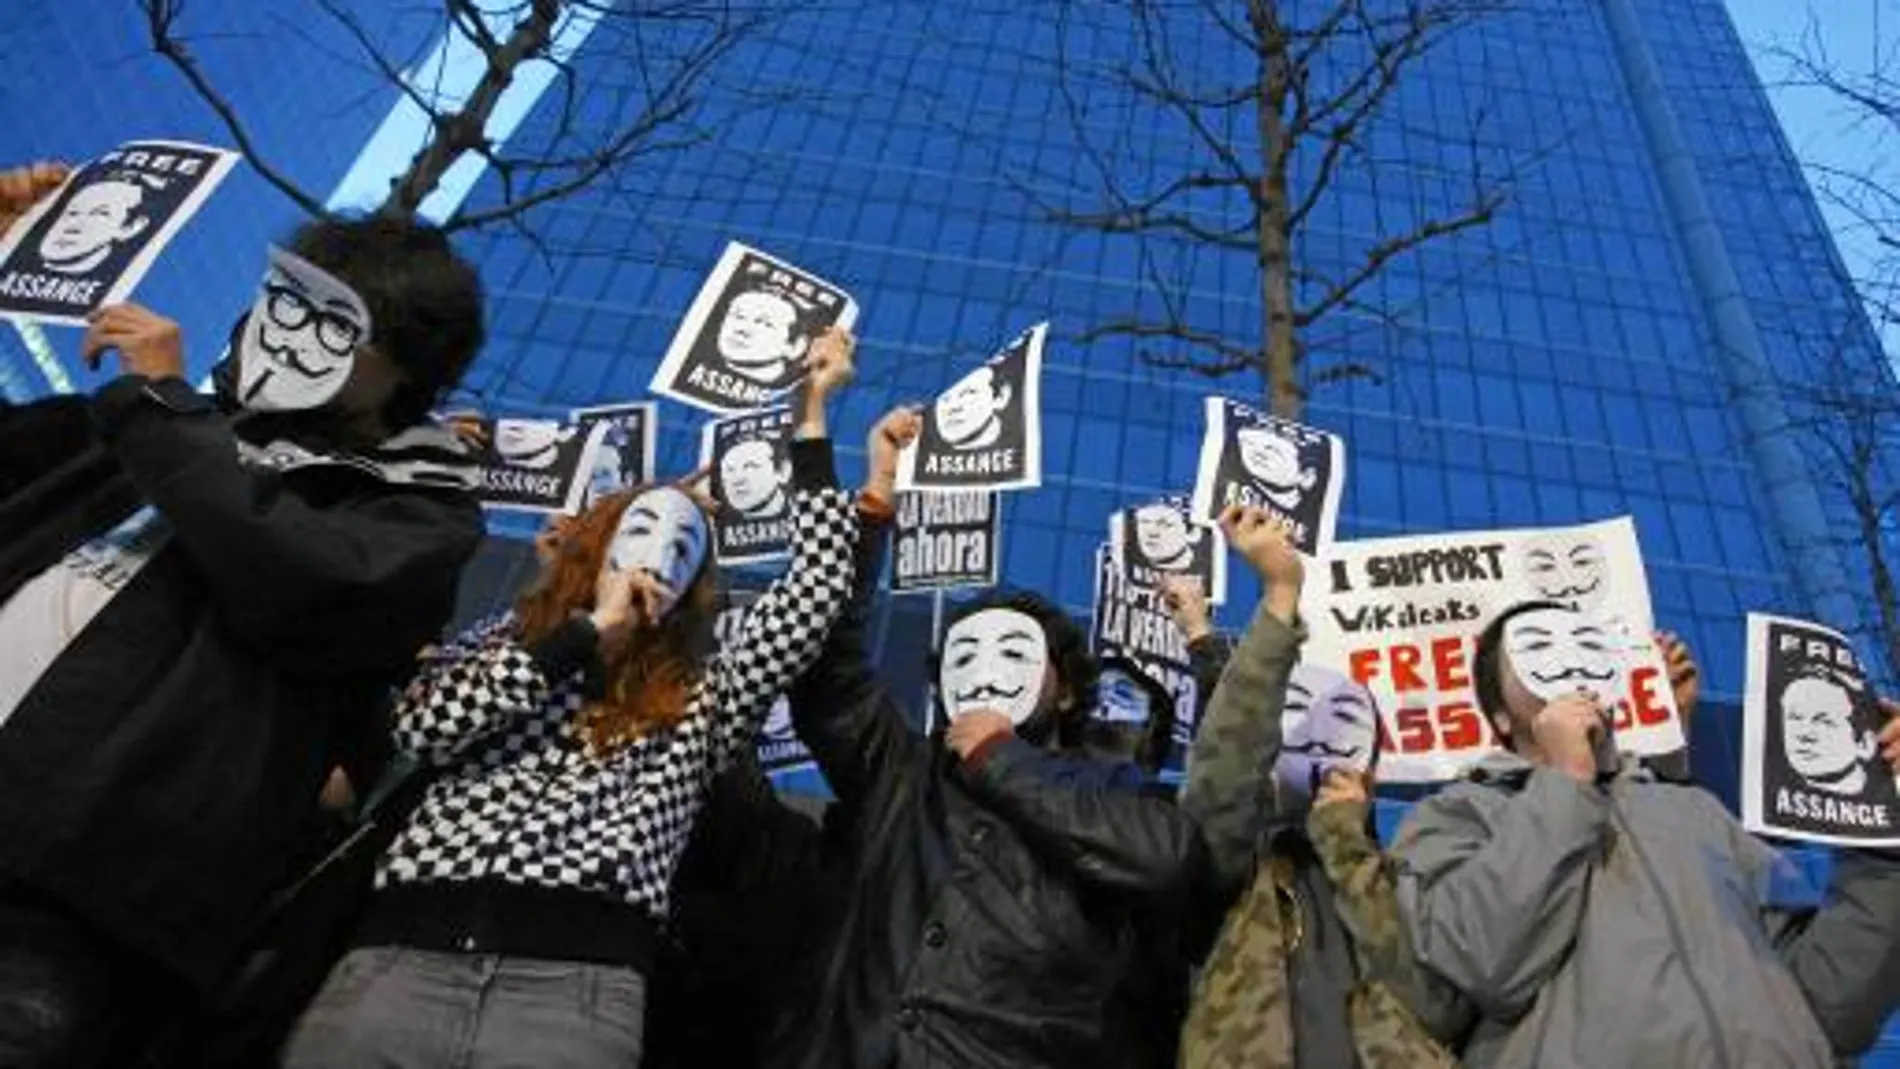 Simpatizantes de Wikileaks se manifestaron ayer en Madrid, enmascarados, en apoyo a Assange